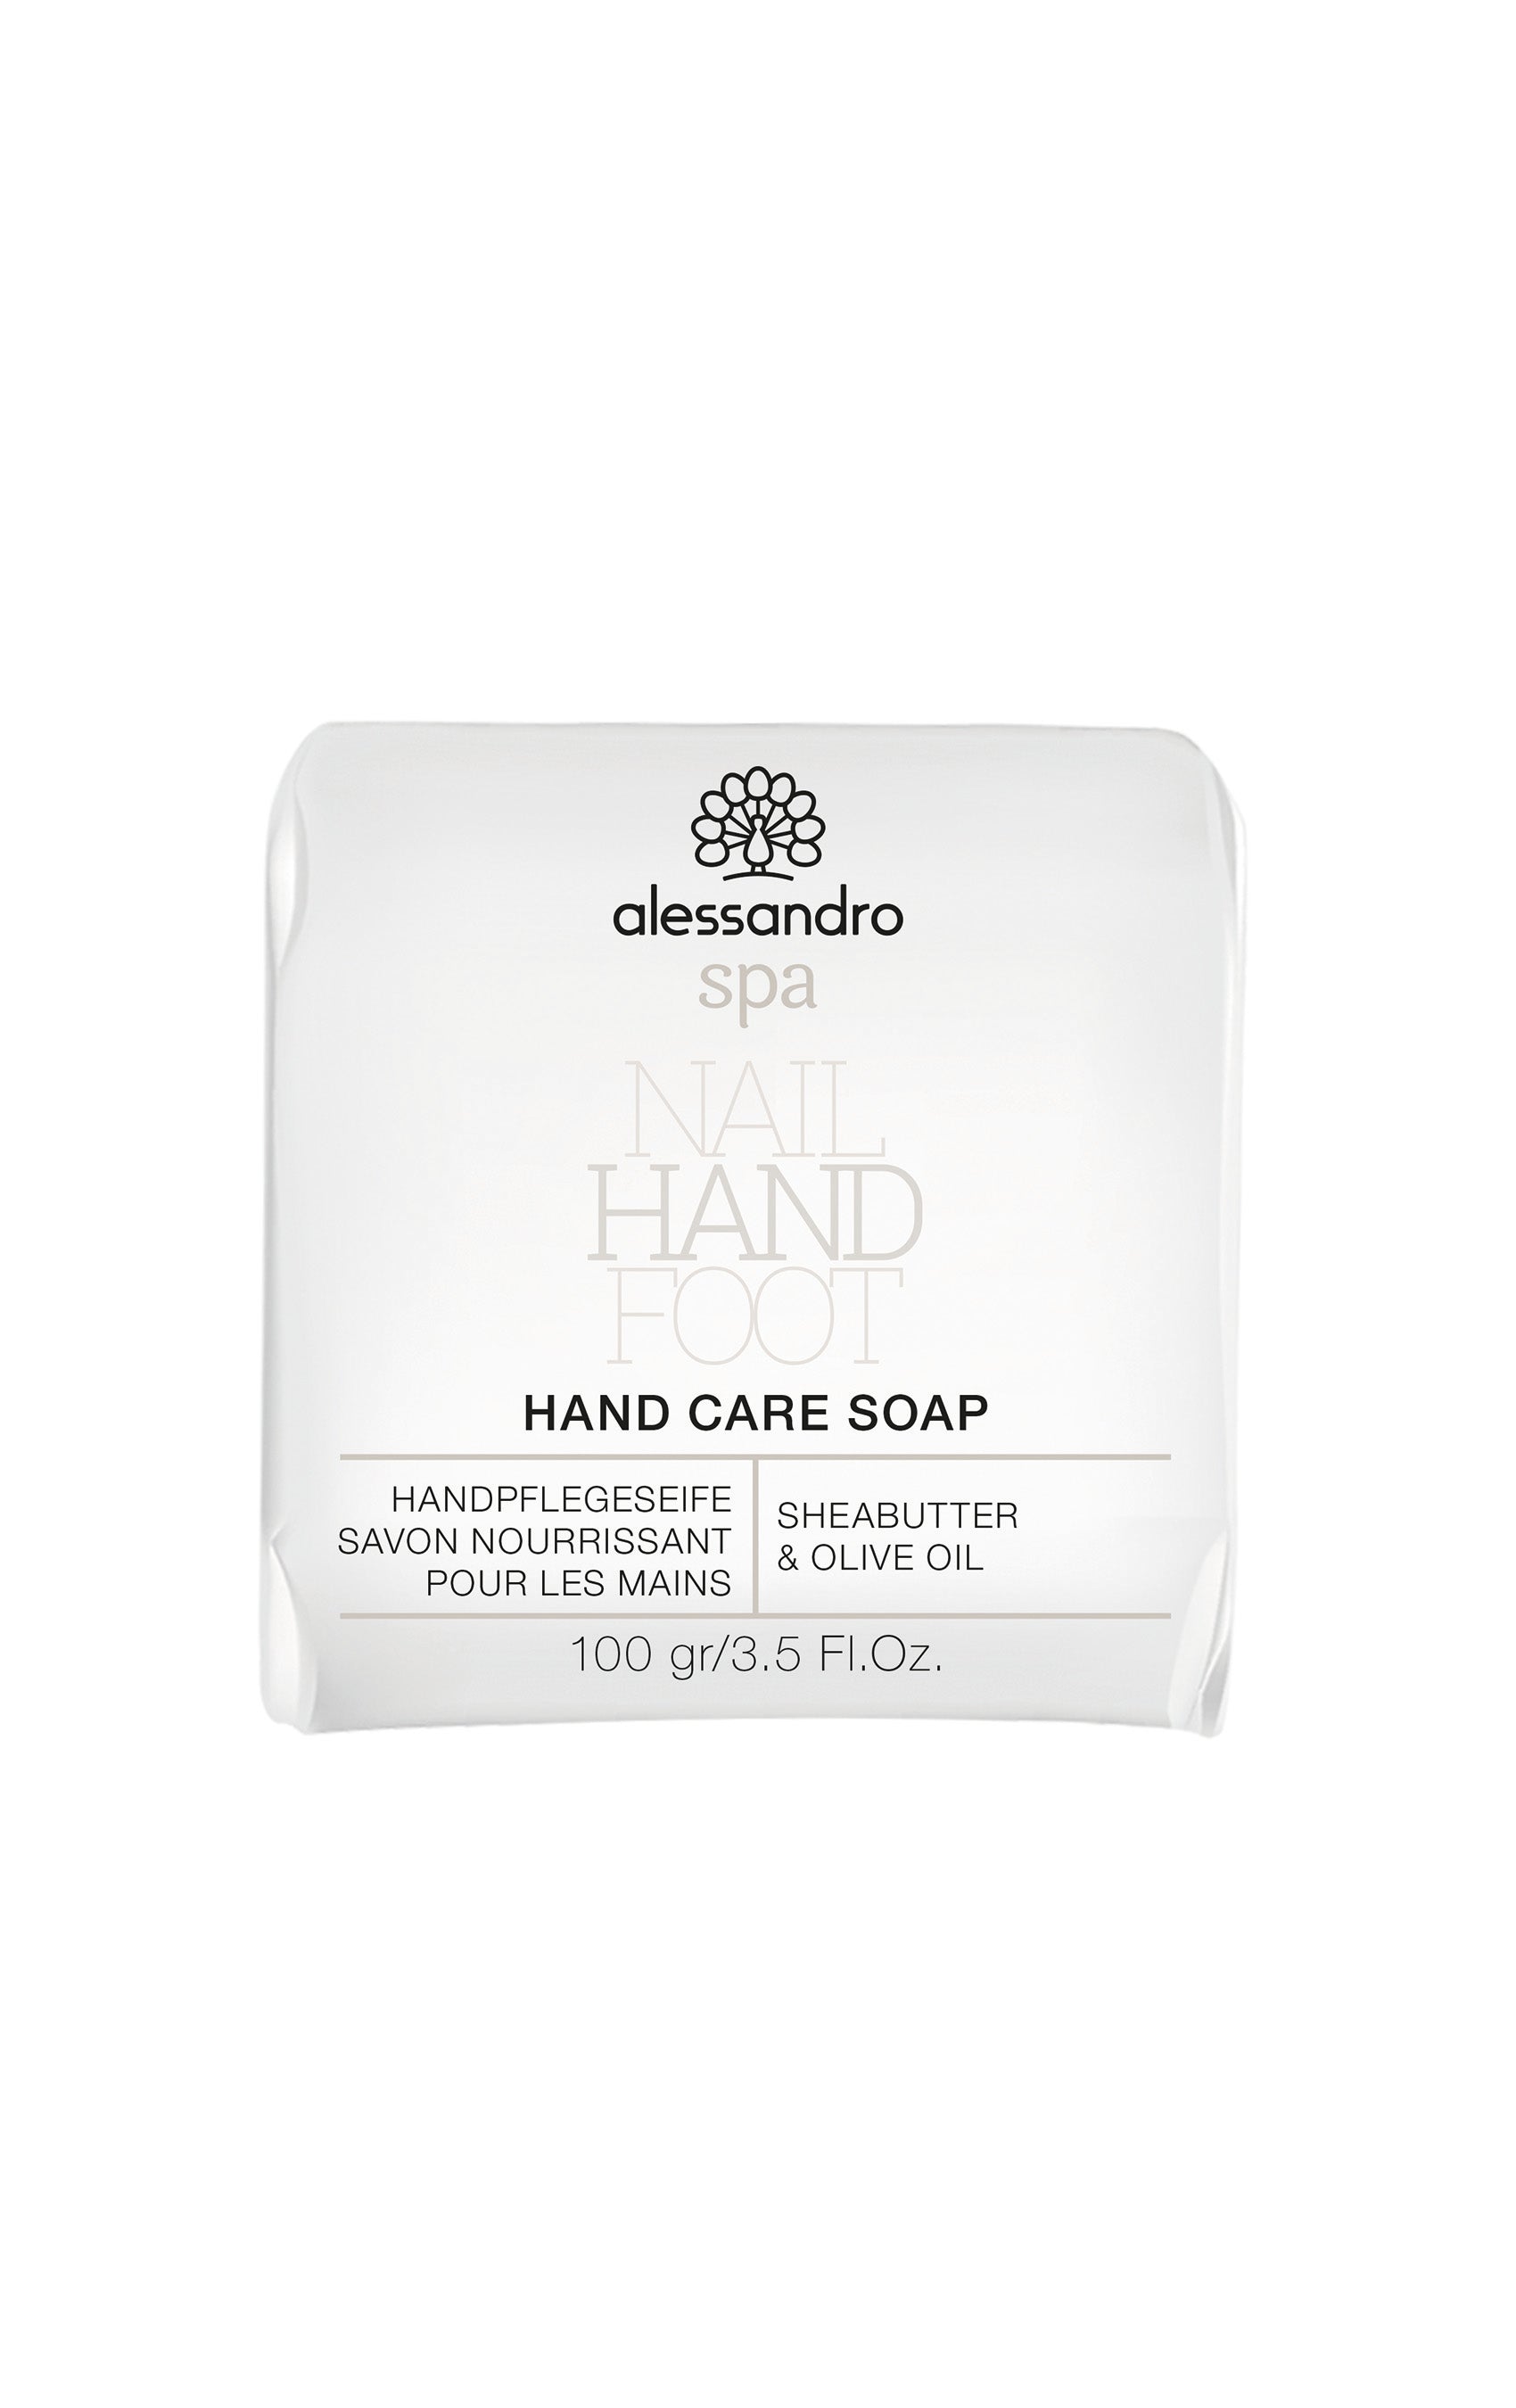 Hand – - CARE Spa Cosmetics alessandro Baltic HAND